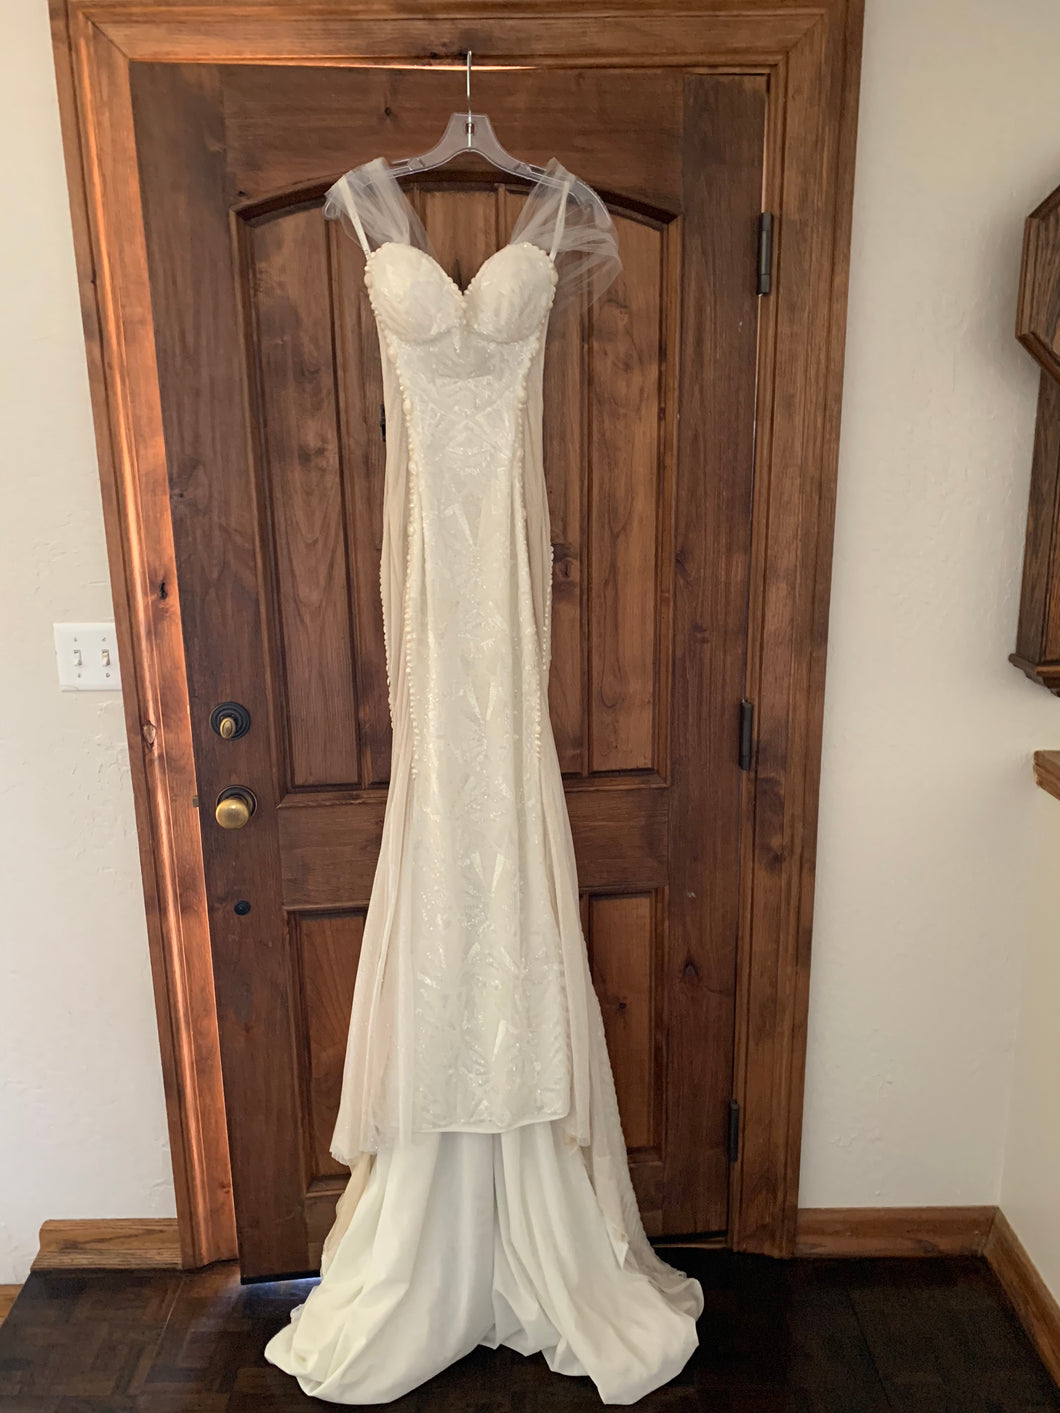 Galia Lahav 'Joyce' size 2 new wedding dress front view on hanger